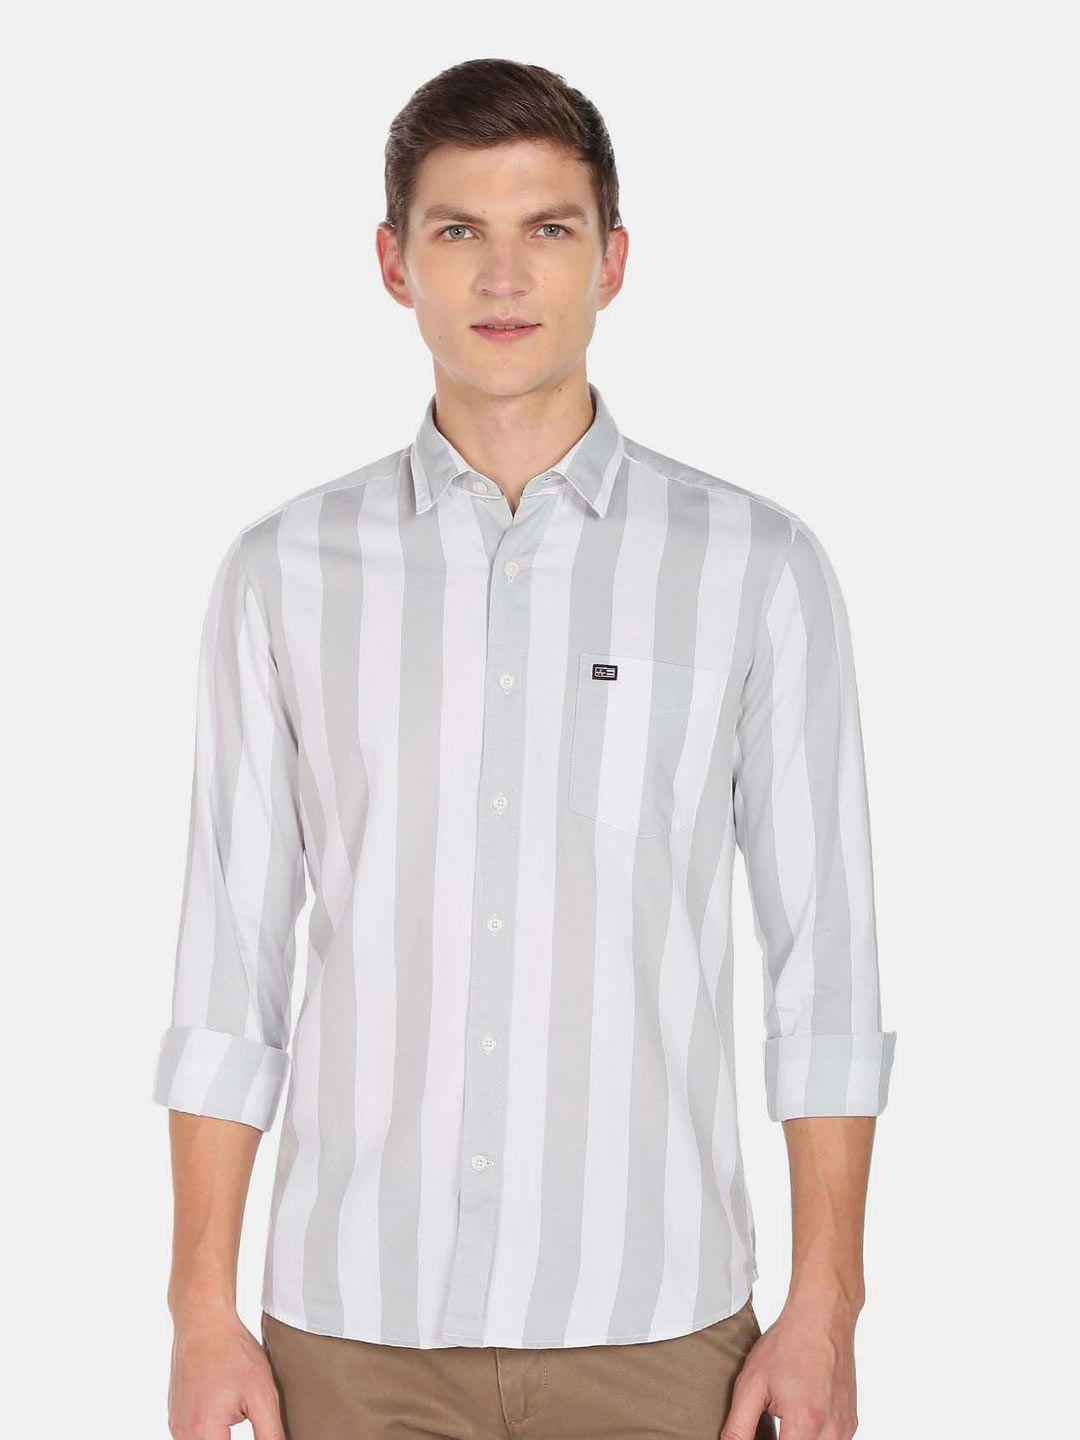 arrow-sport-vertical-striped-pure-cotton-casual-shirt